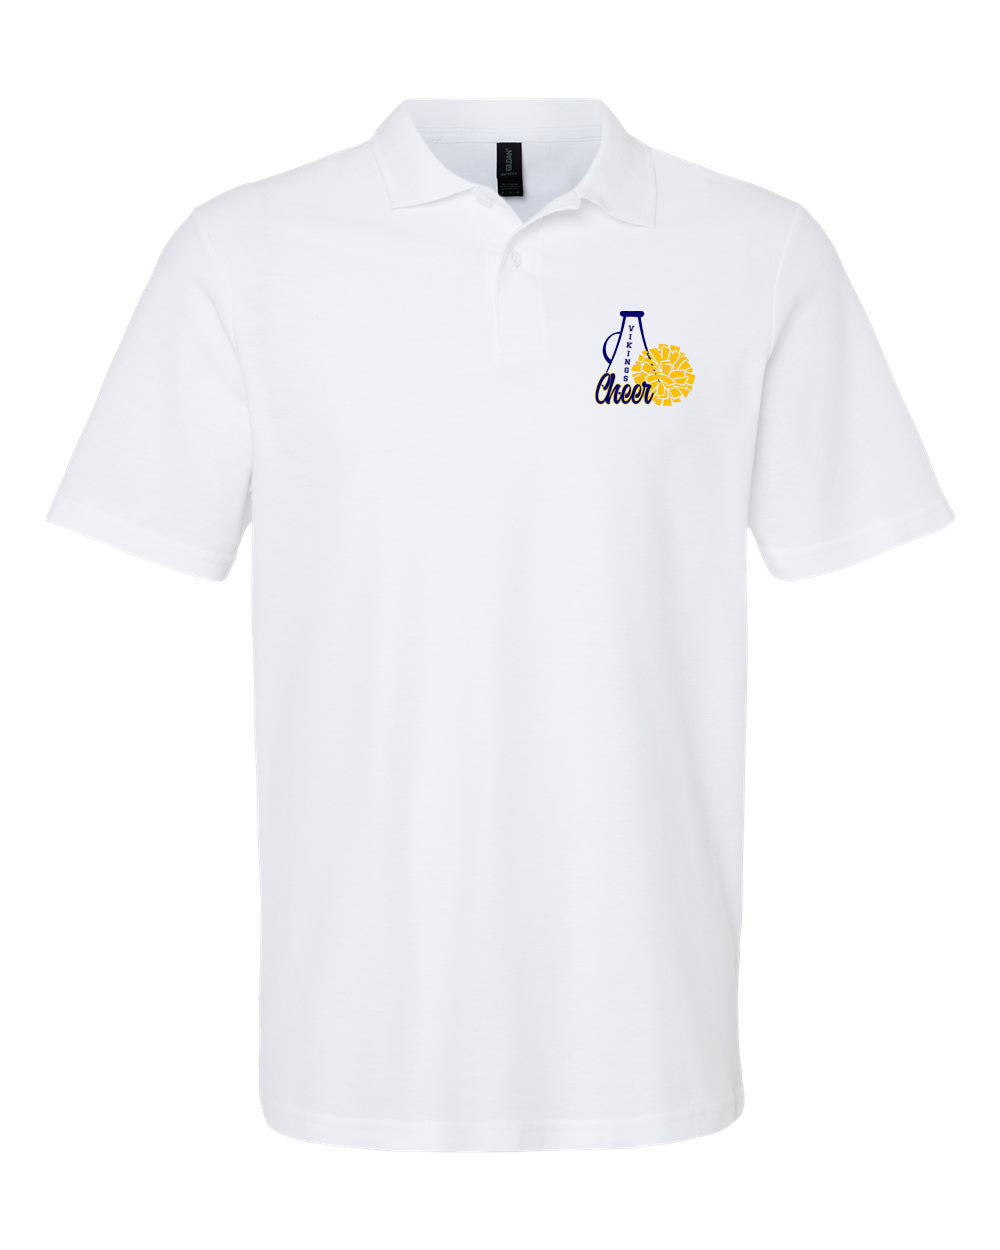 Vernon Vikings Cheer Design 14 Polo T-Shirt